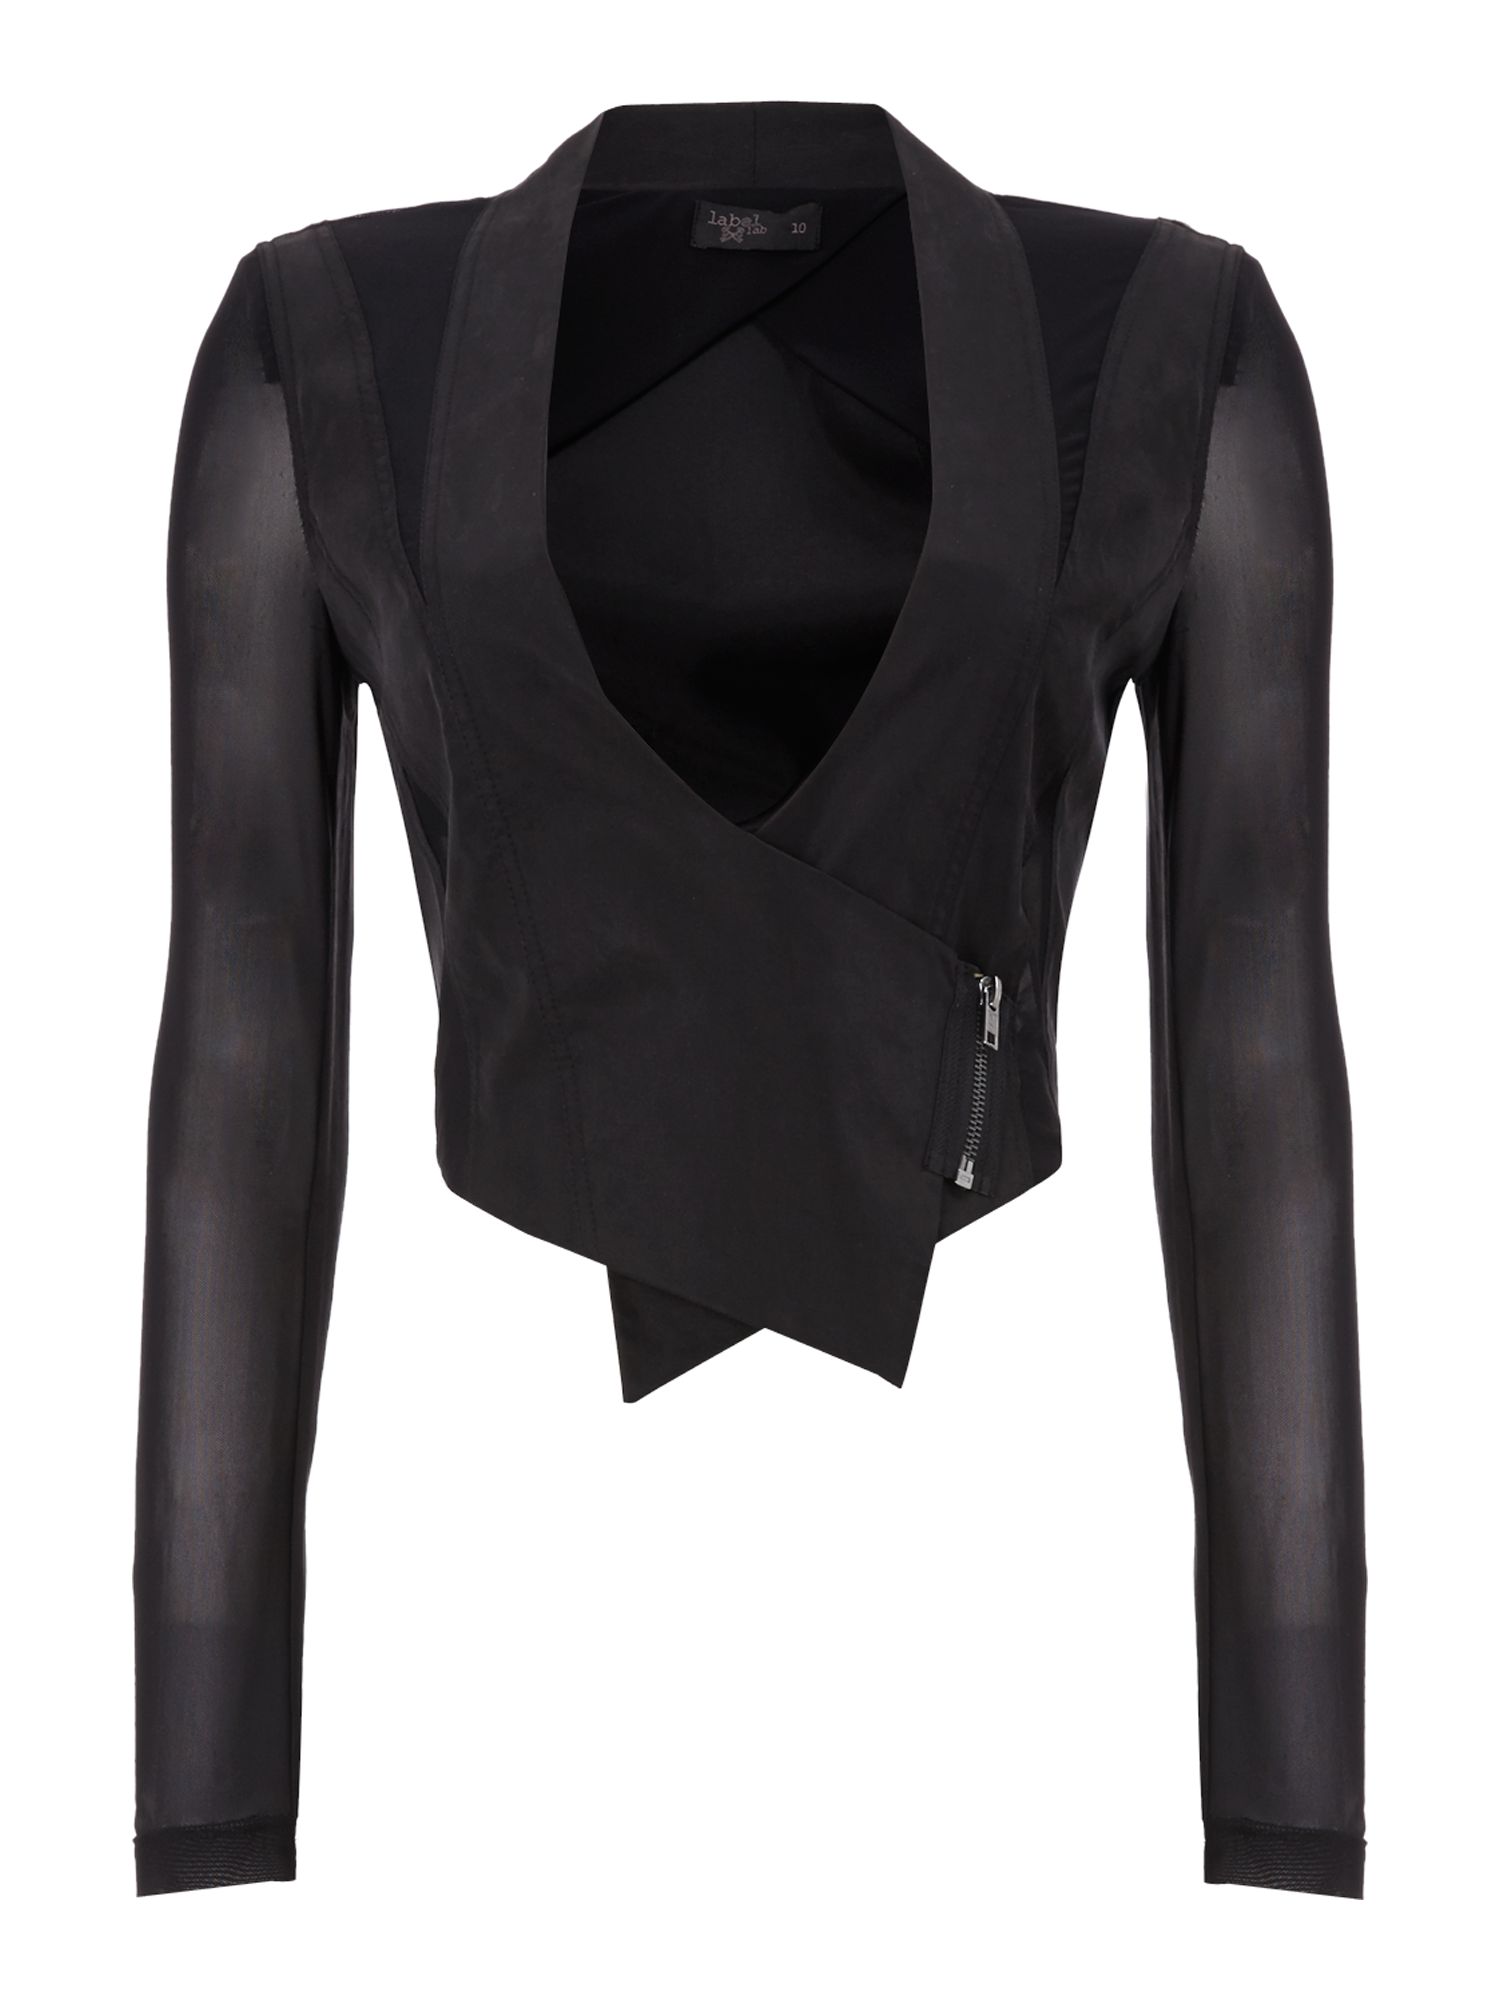 Label lab Cropped Zip Jacket in Black | Lyst